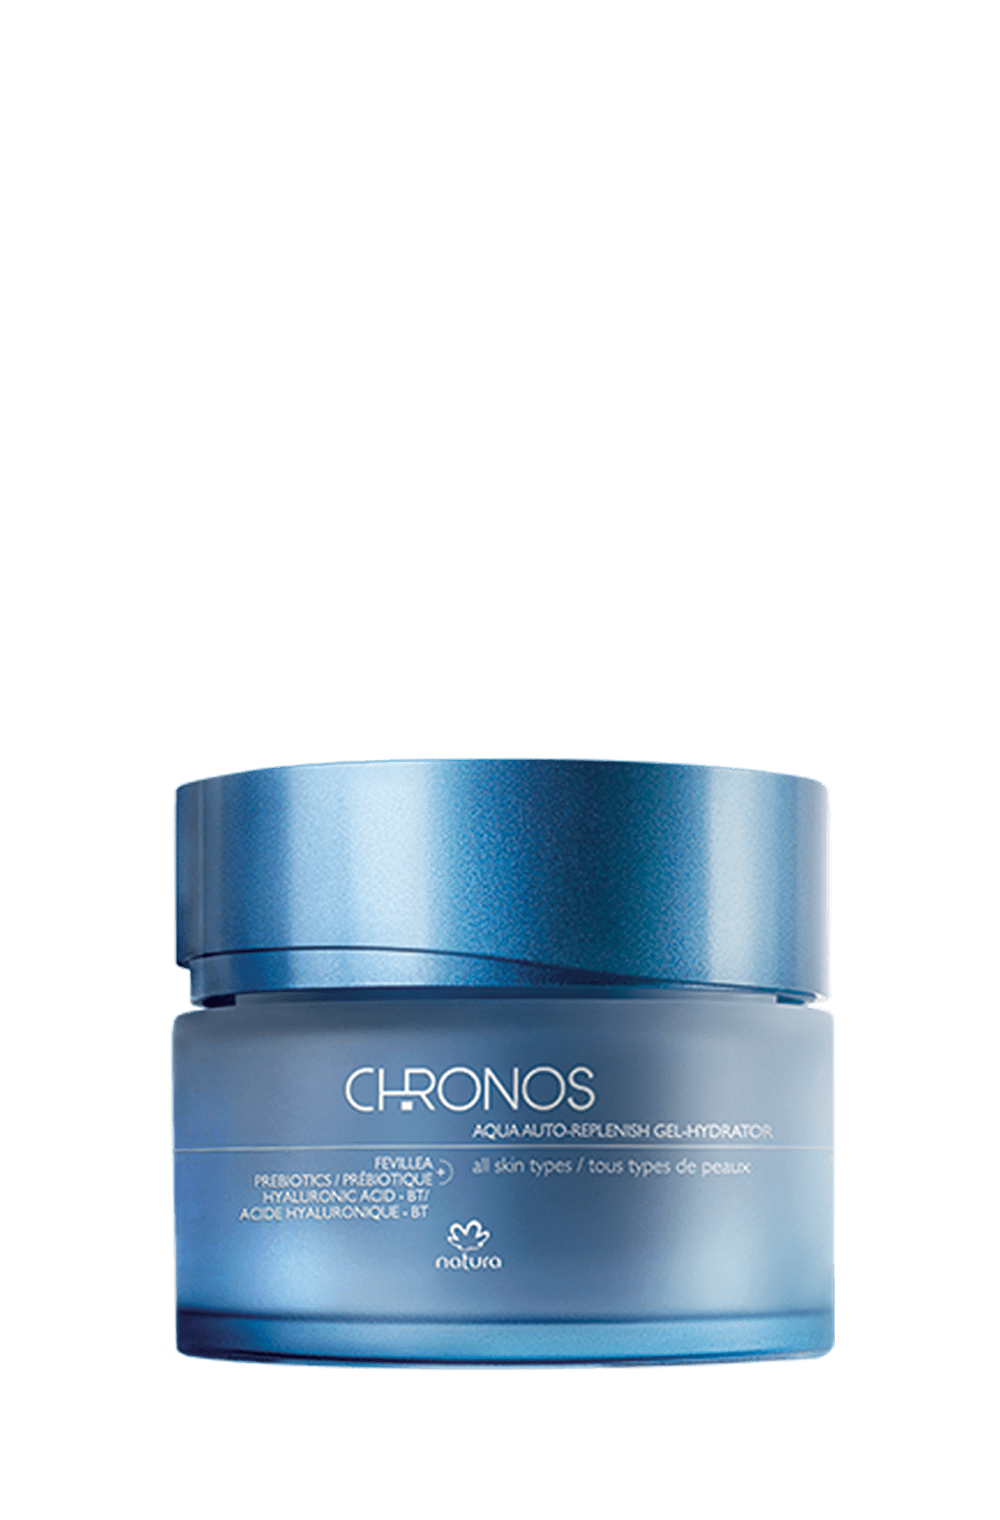 Chronos Aqua Auto-Replenish Gel Hydrator - Natura